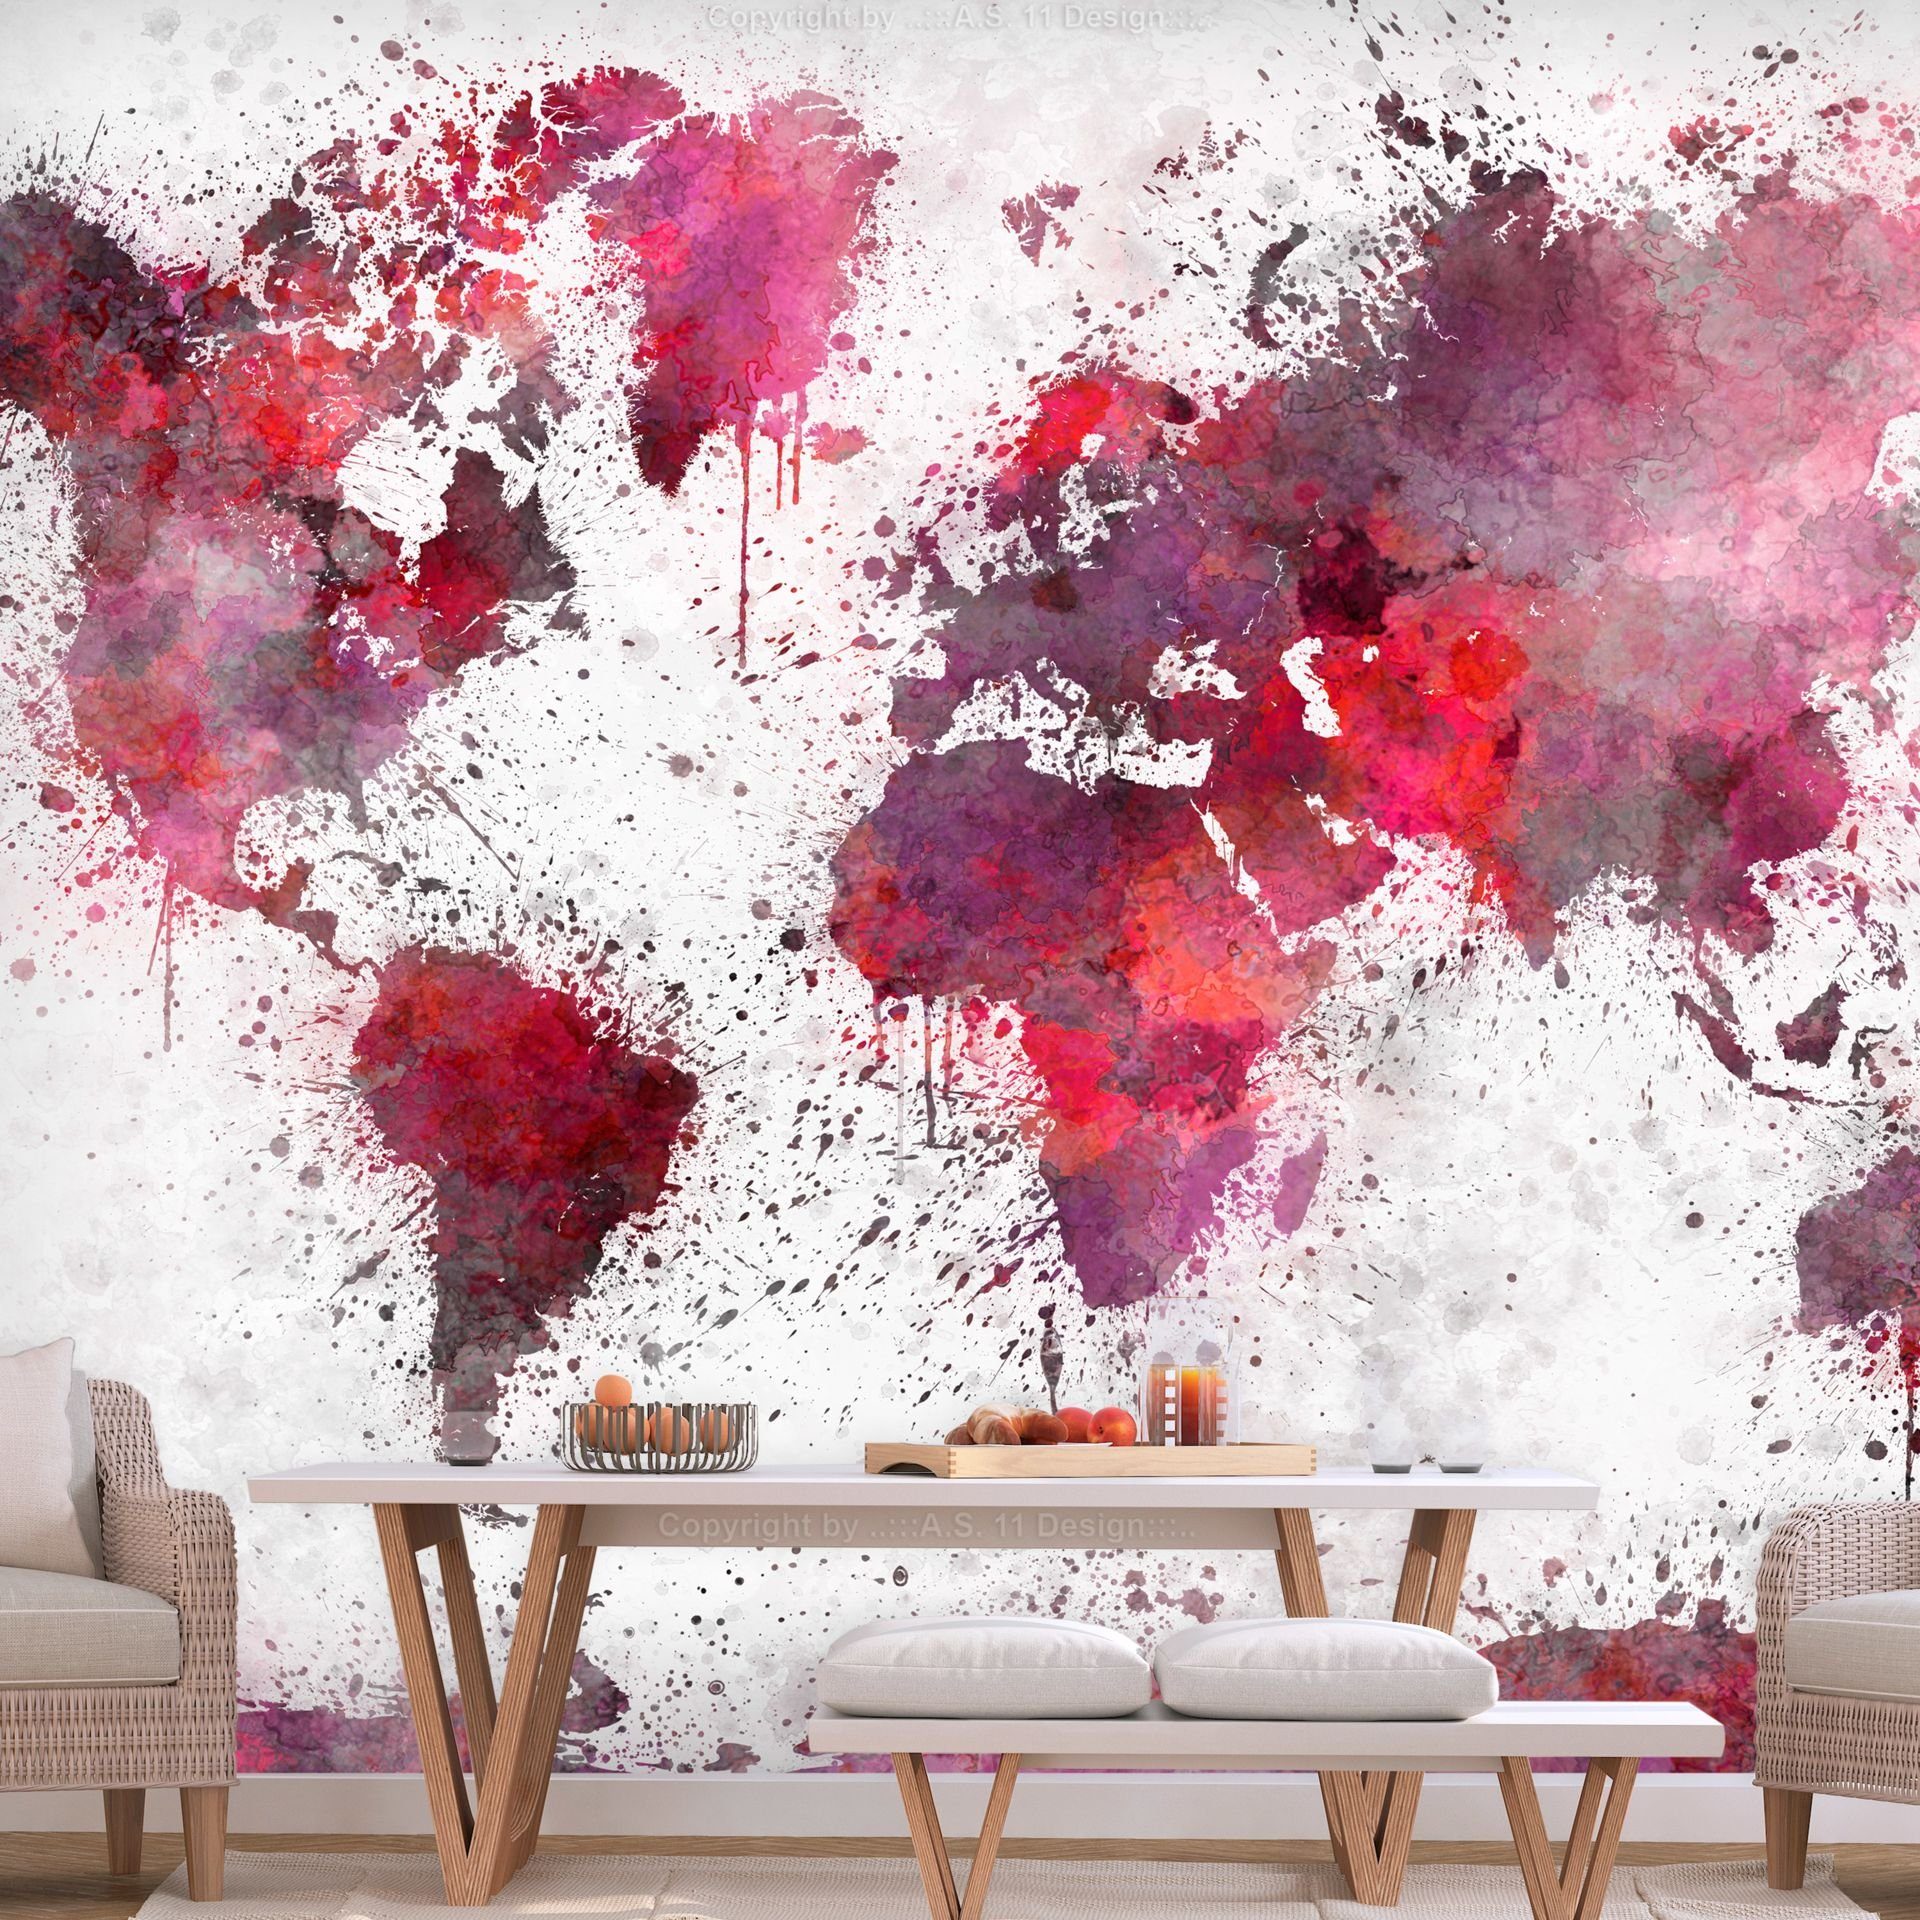 KUNSTLOFT Vliestapete World Map: Red Watercolors 0.98x0.7 m, halb-matt, matt, lichtbeständige Design Tapete